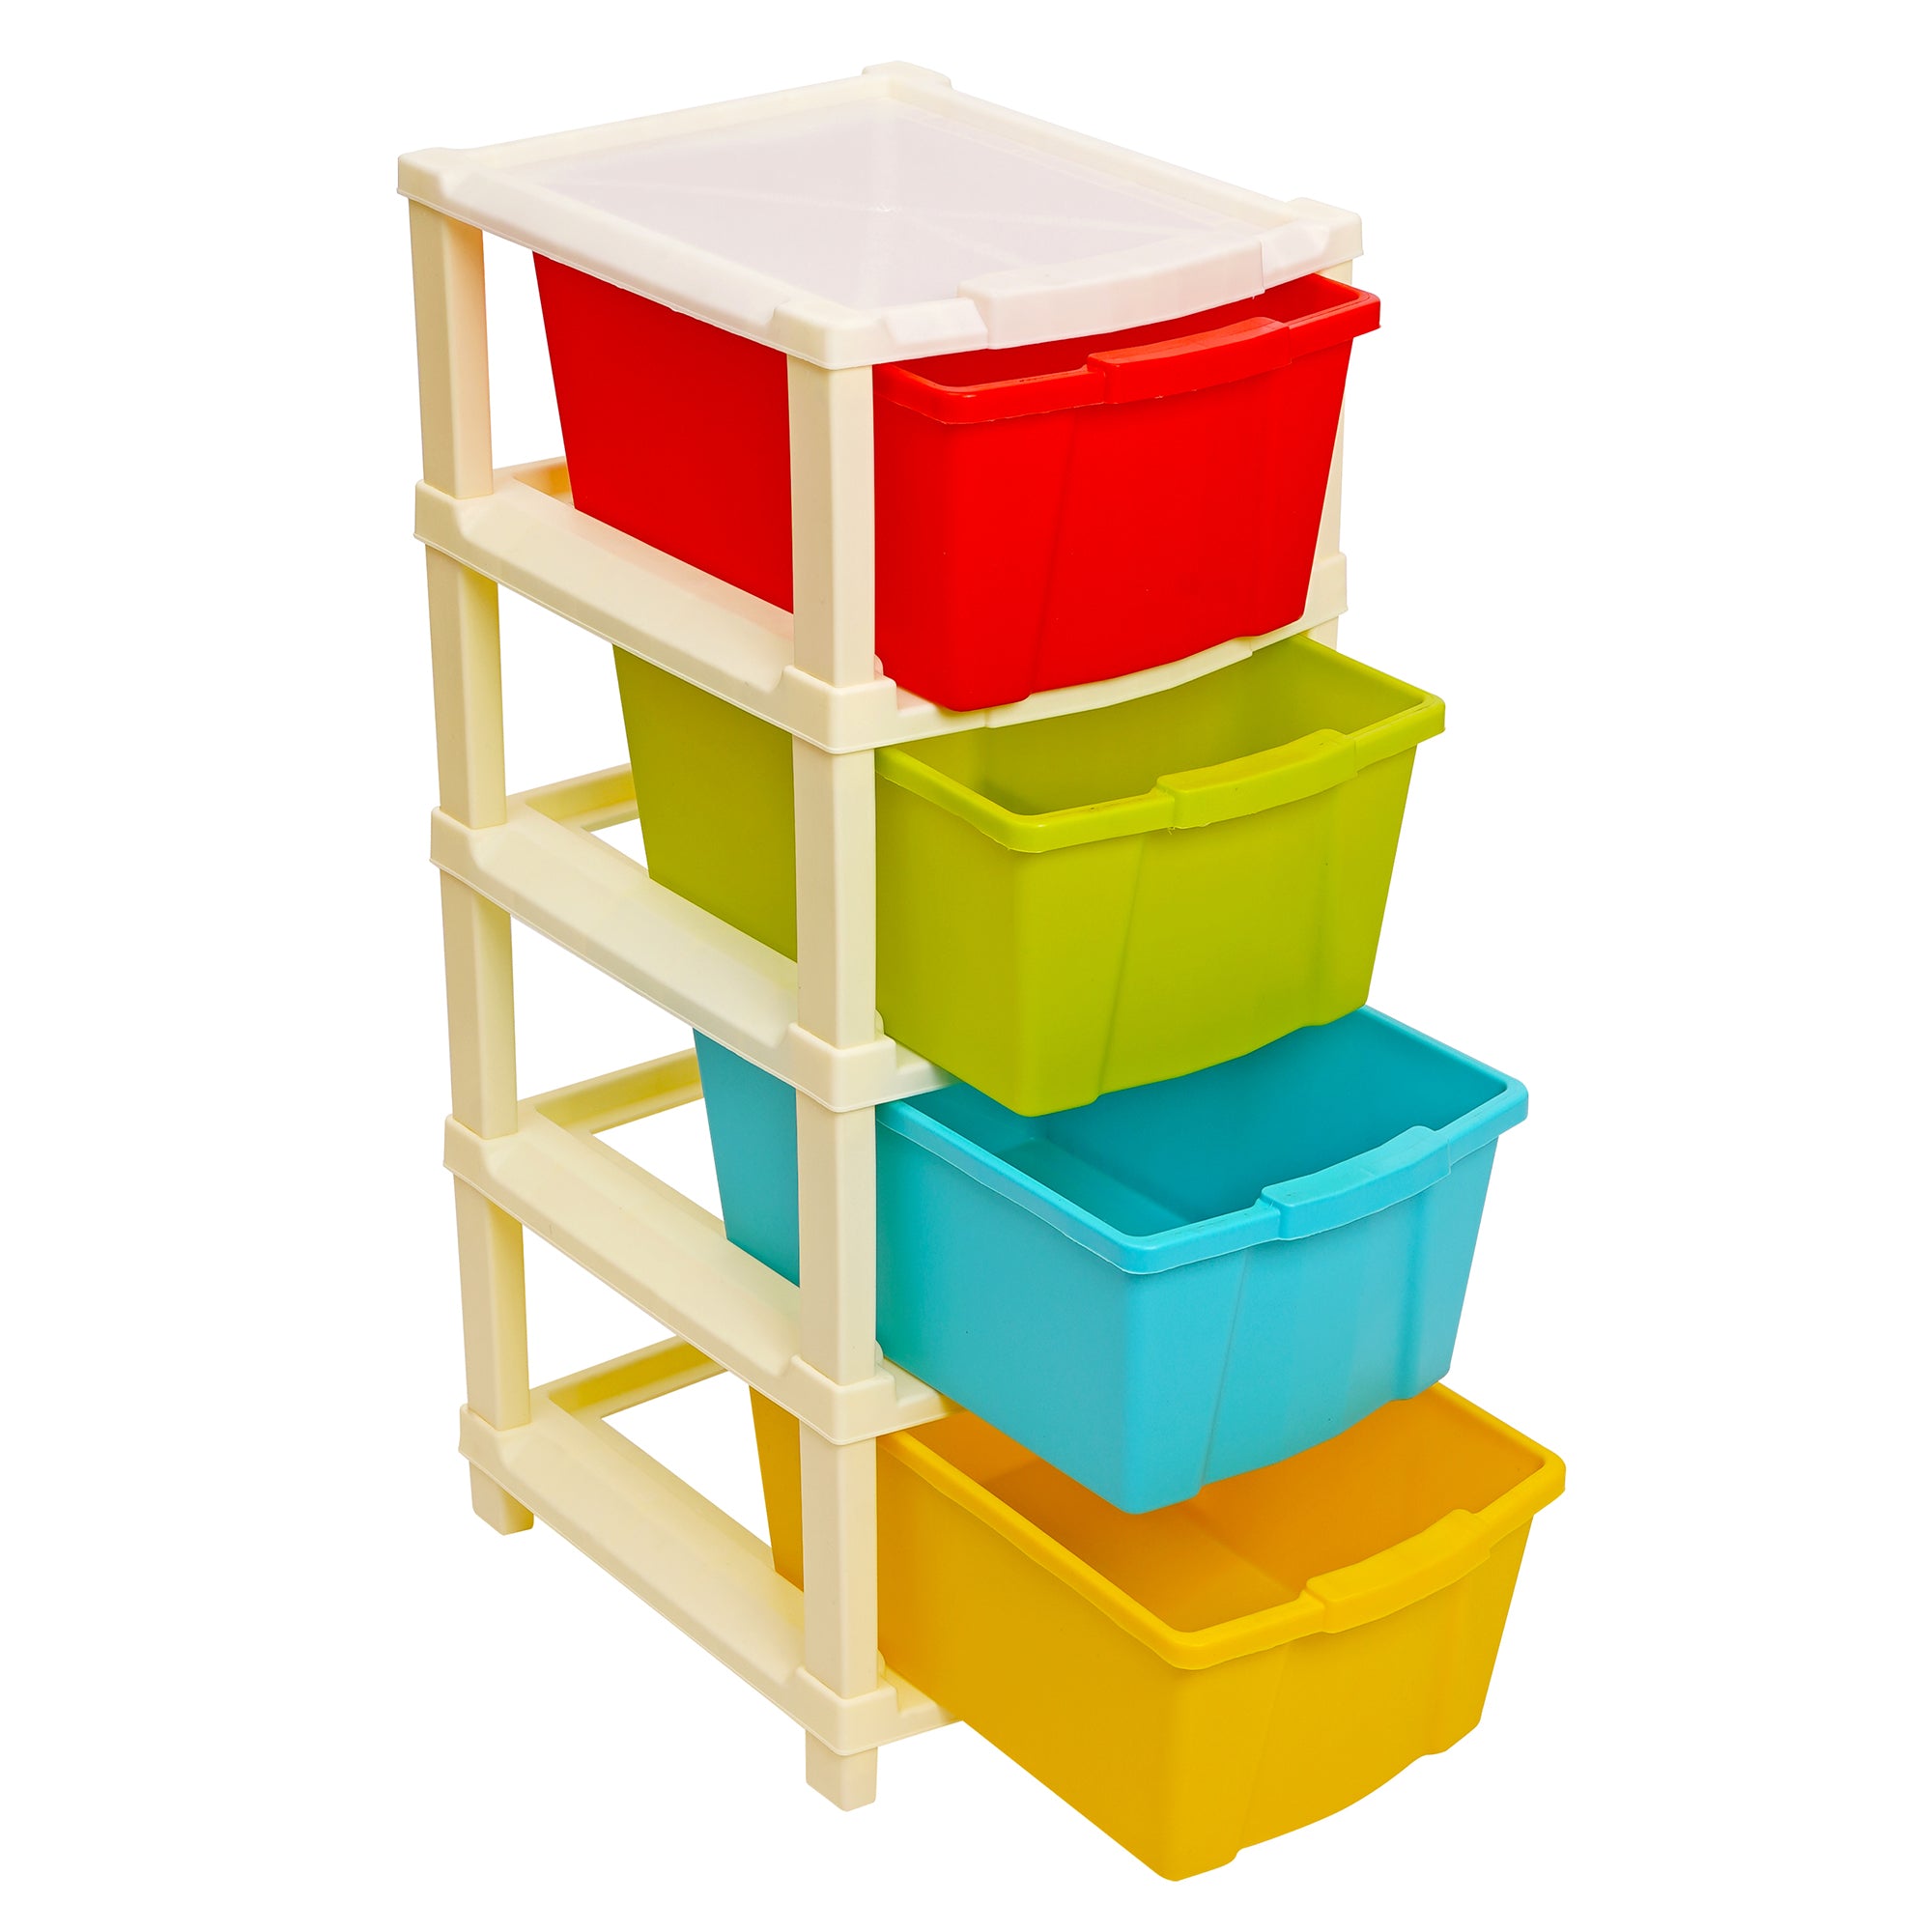 LivingBasics Free-Standing Multipurpose Plastic Storage Drawers  Organizer/Shelves/Rack, Sturdy Units for Home, Kids Room, Office, Kitchen,  Bathroom